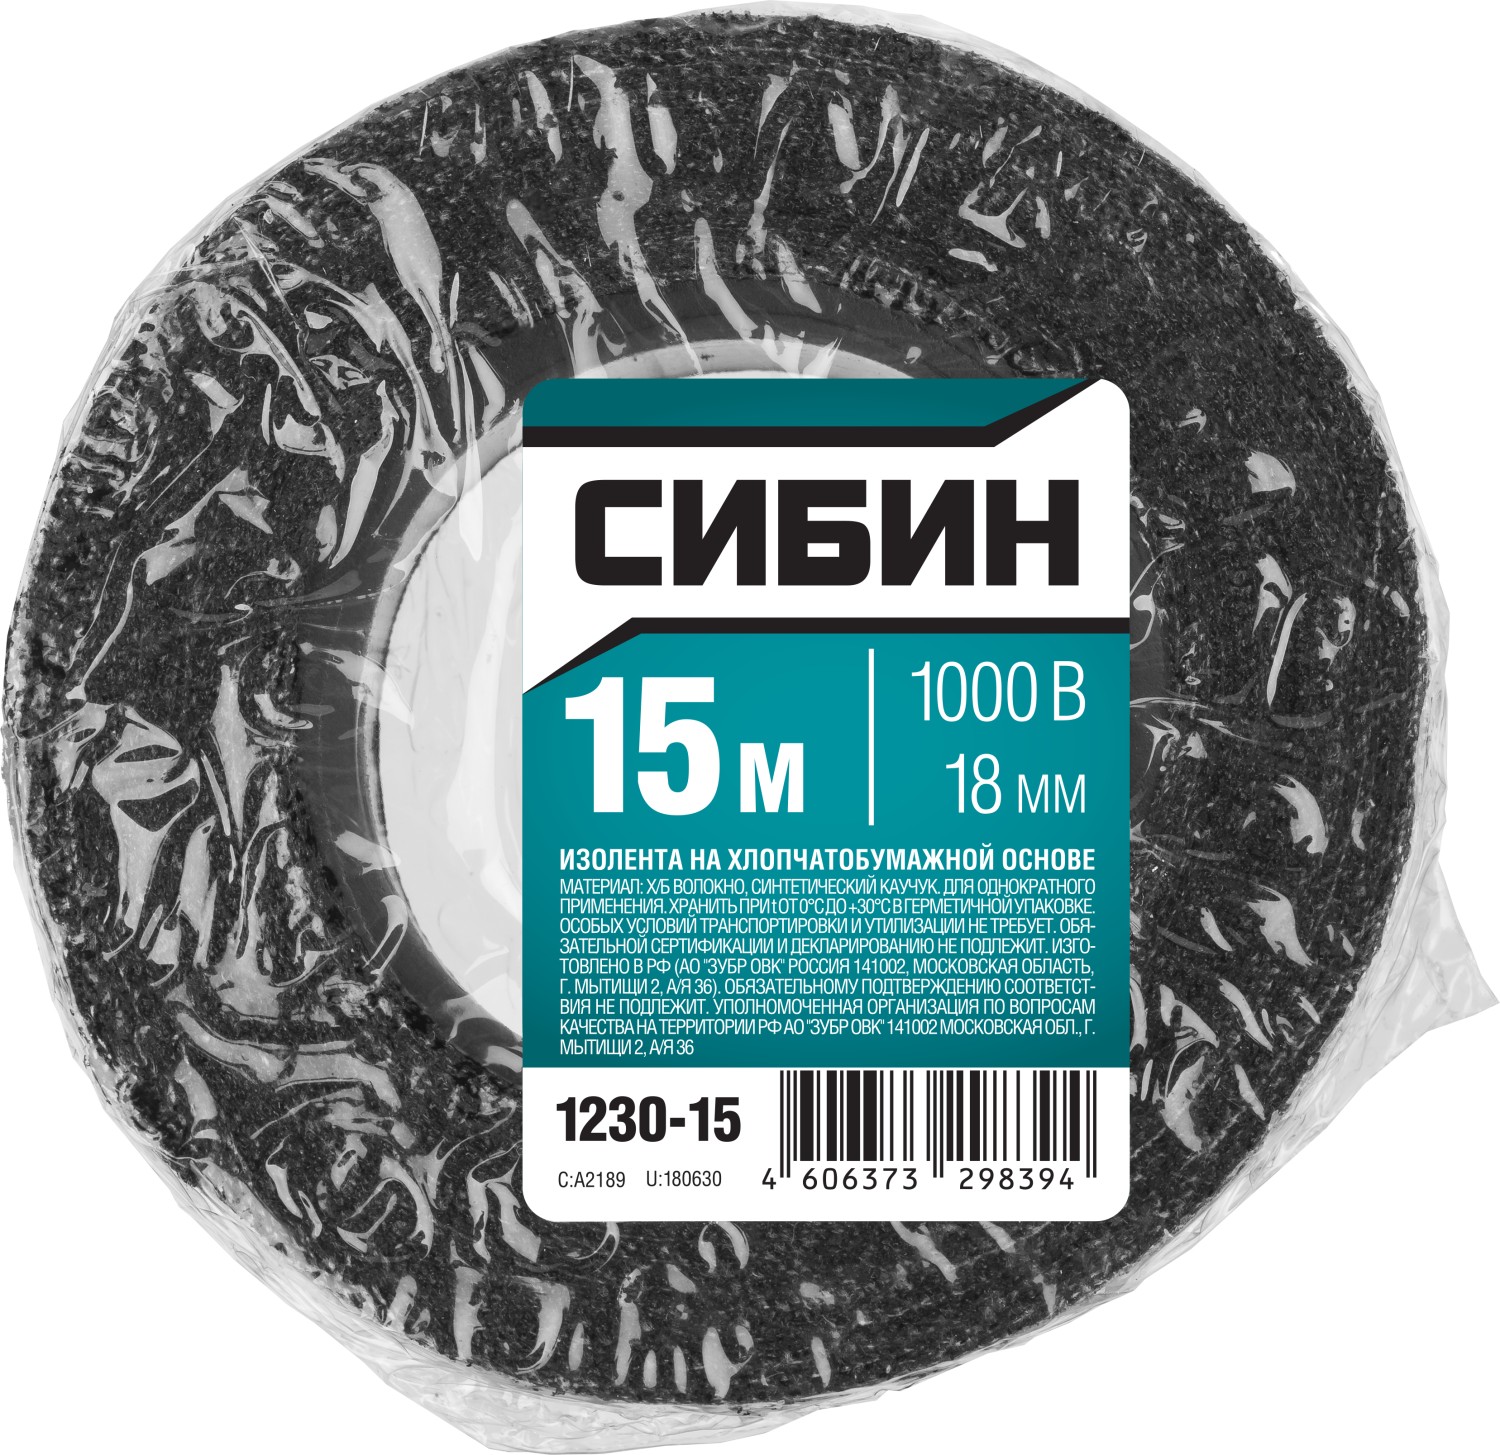 СИБИН 18 мм х 15 м, 1 000 В, черная, изолента х/б (1230-15)